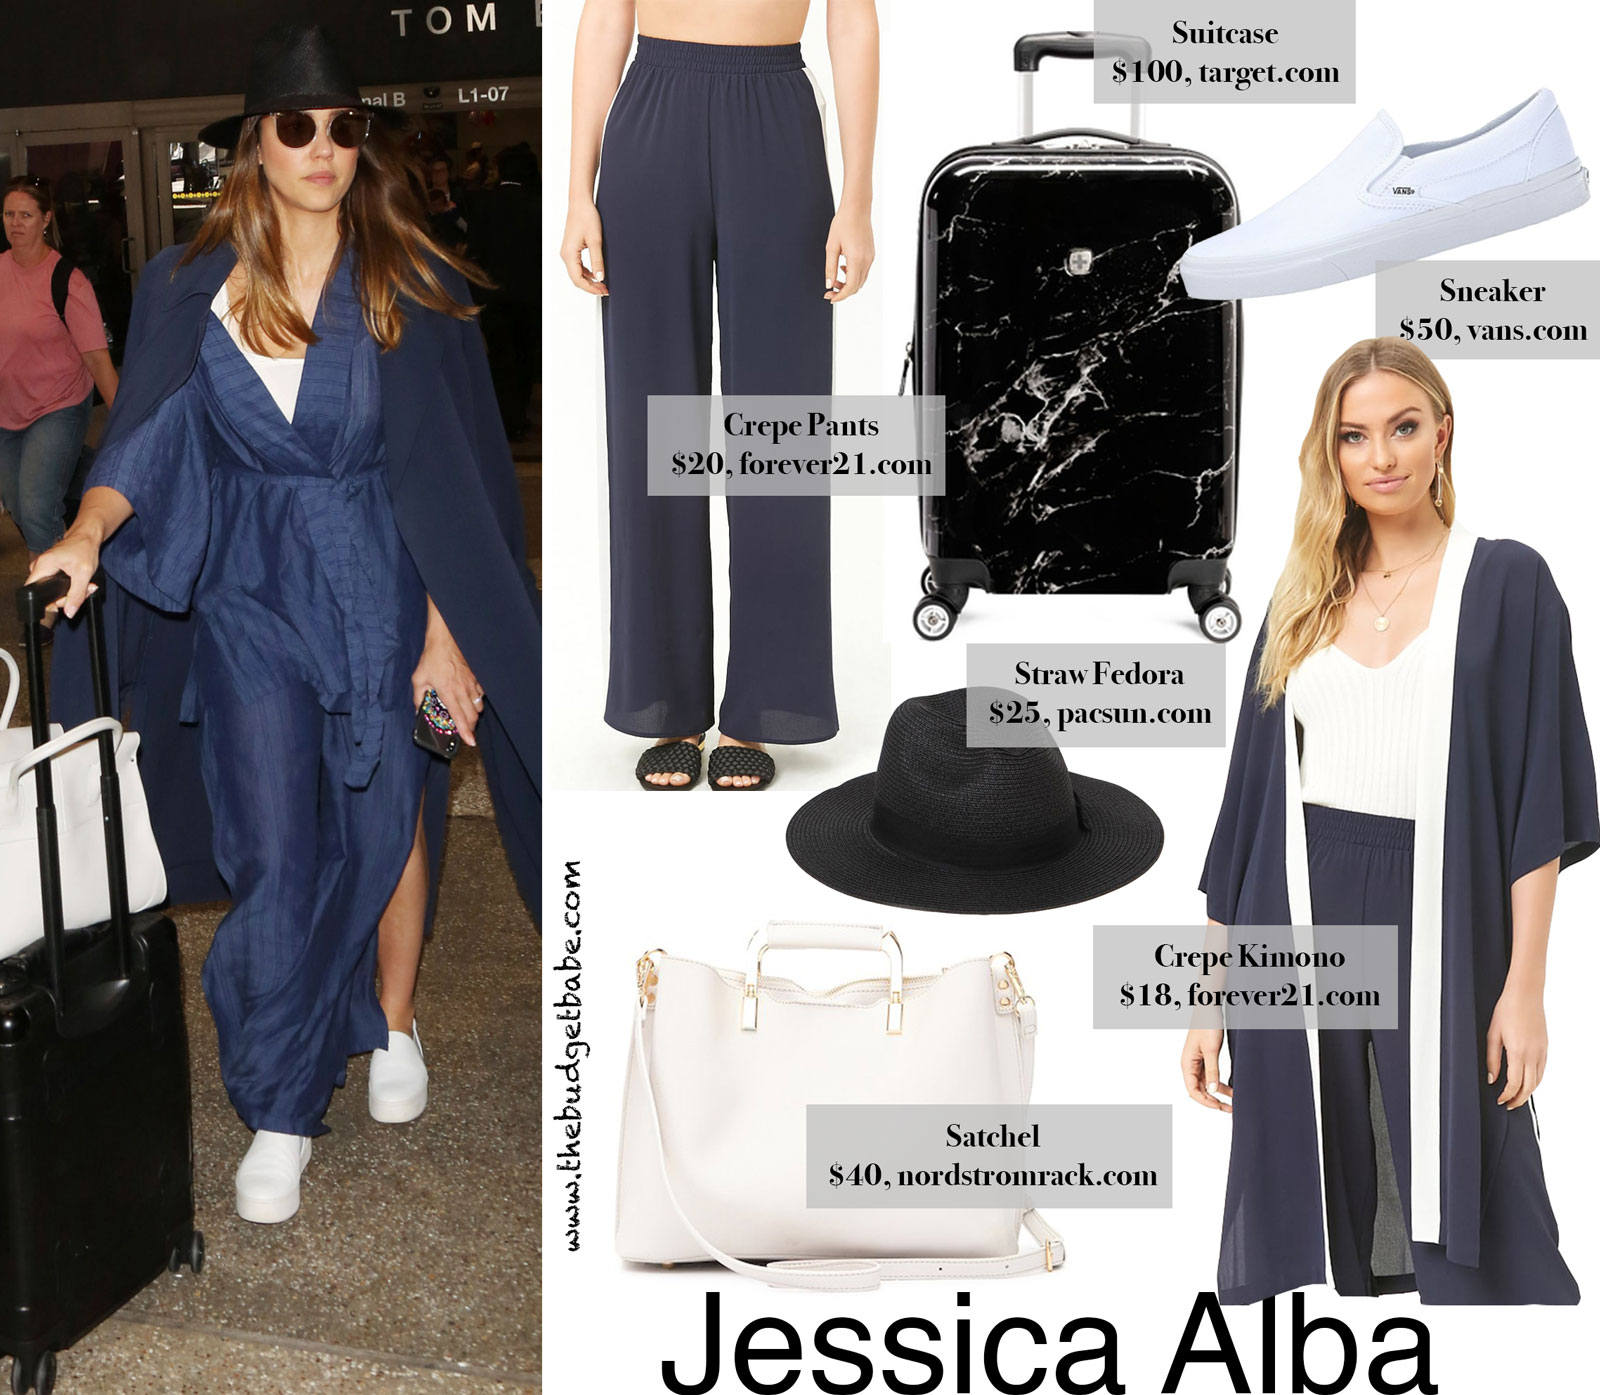 Jessica Alba Onia Wide Leg Pants and Kimono Look for Less